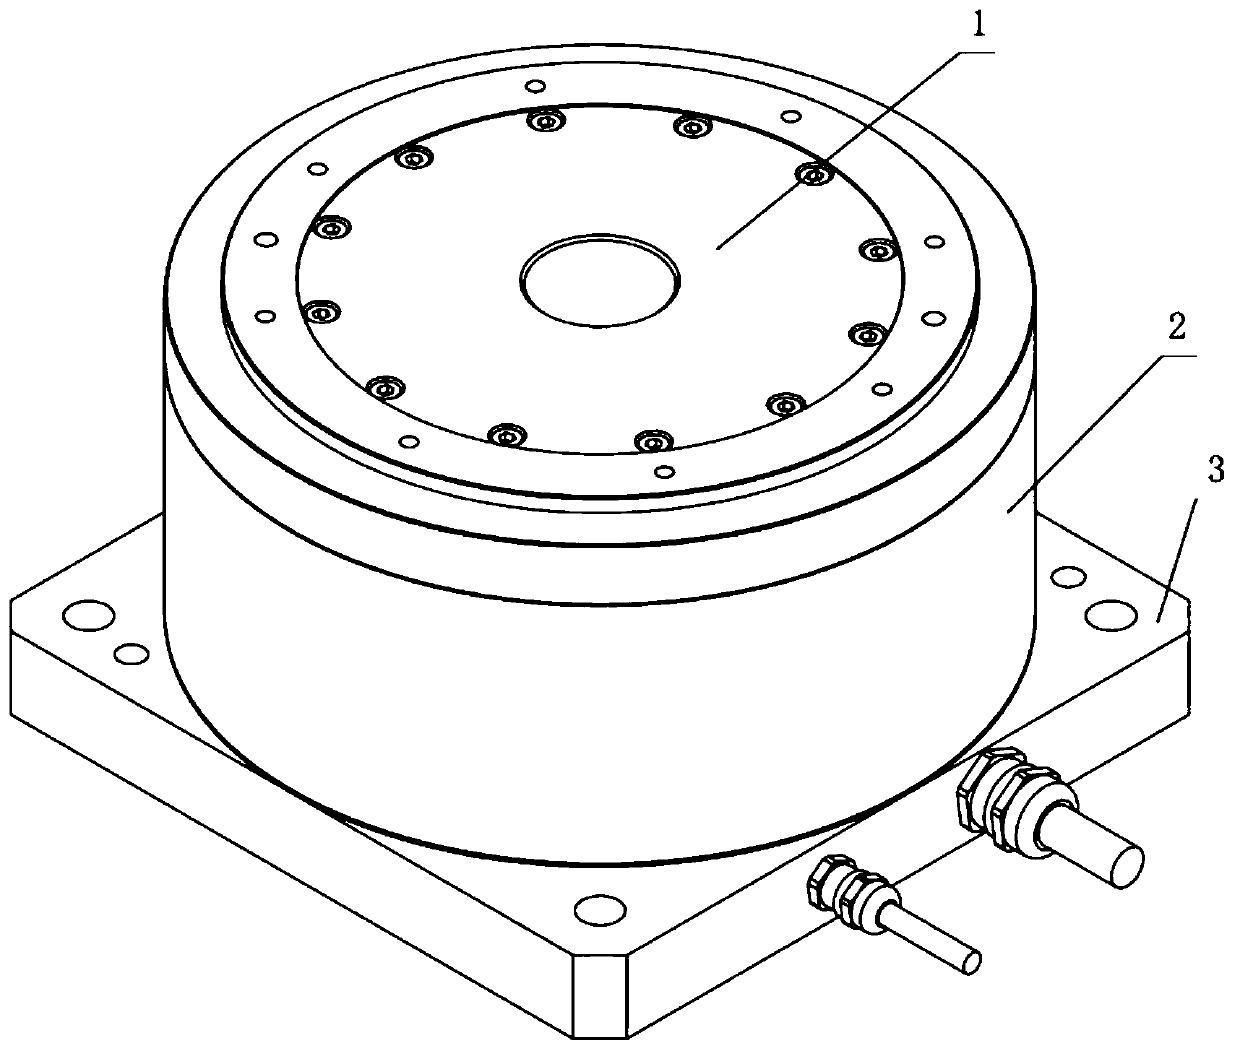 Rigid-flexible coupling rotating platform